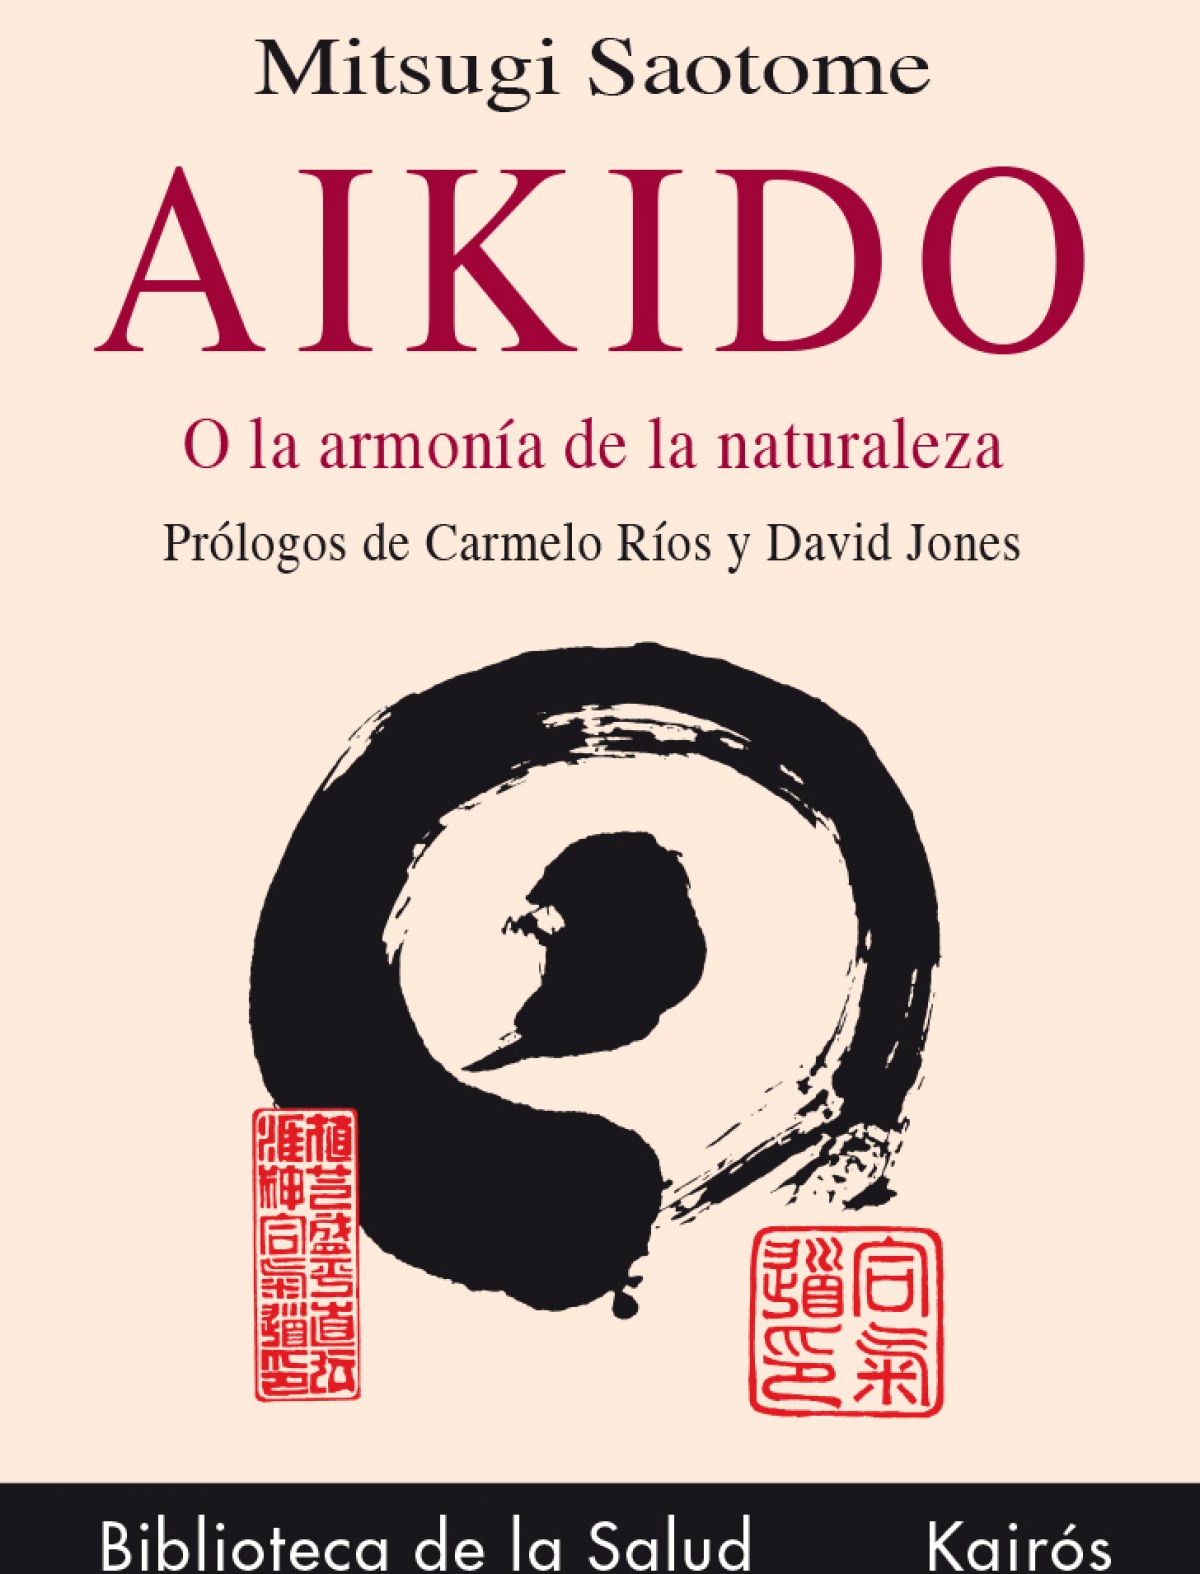 Aikido o la armonia con la naturaleza - Saotome, Mitsugi